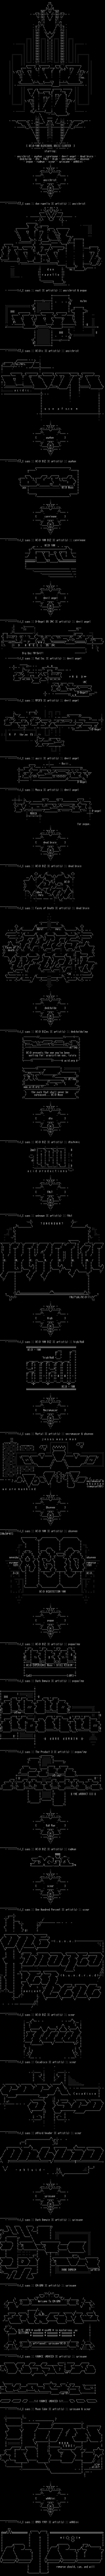 ACiD-100 Oldschool ASCII Cluster by Multiple Artists